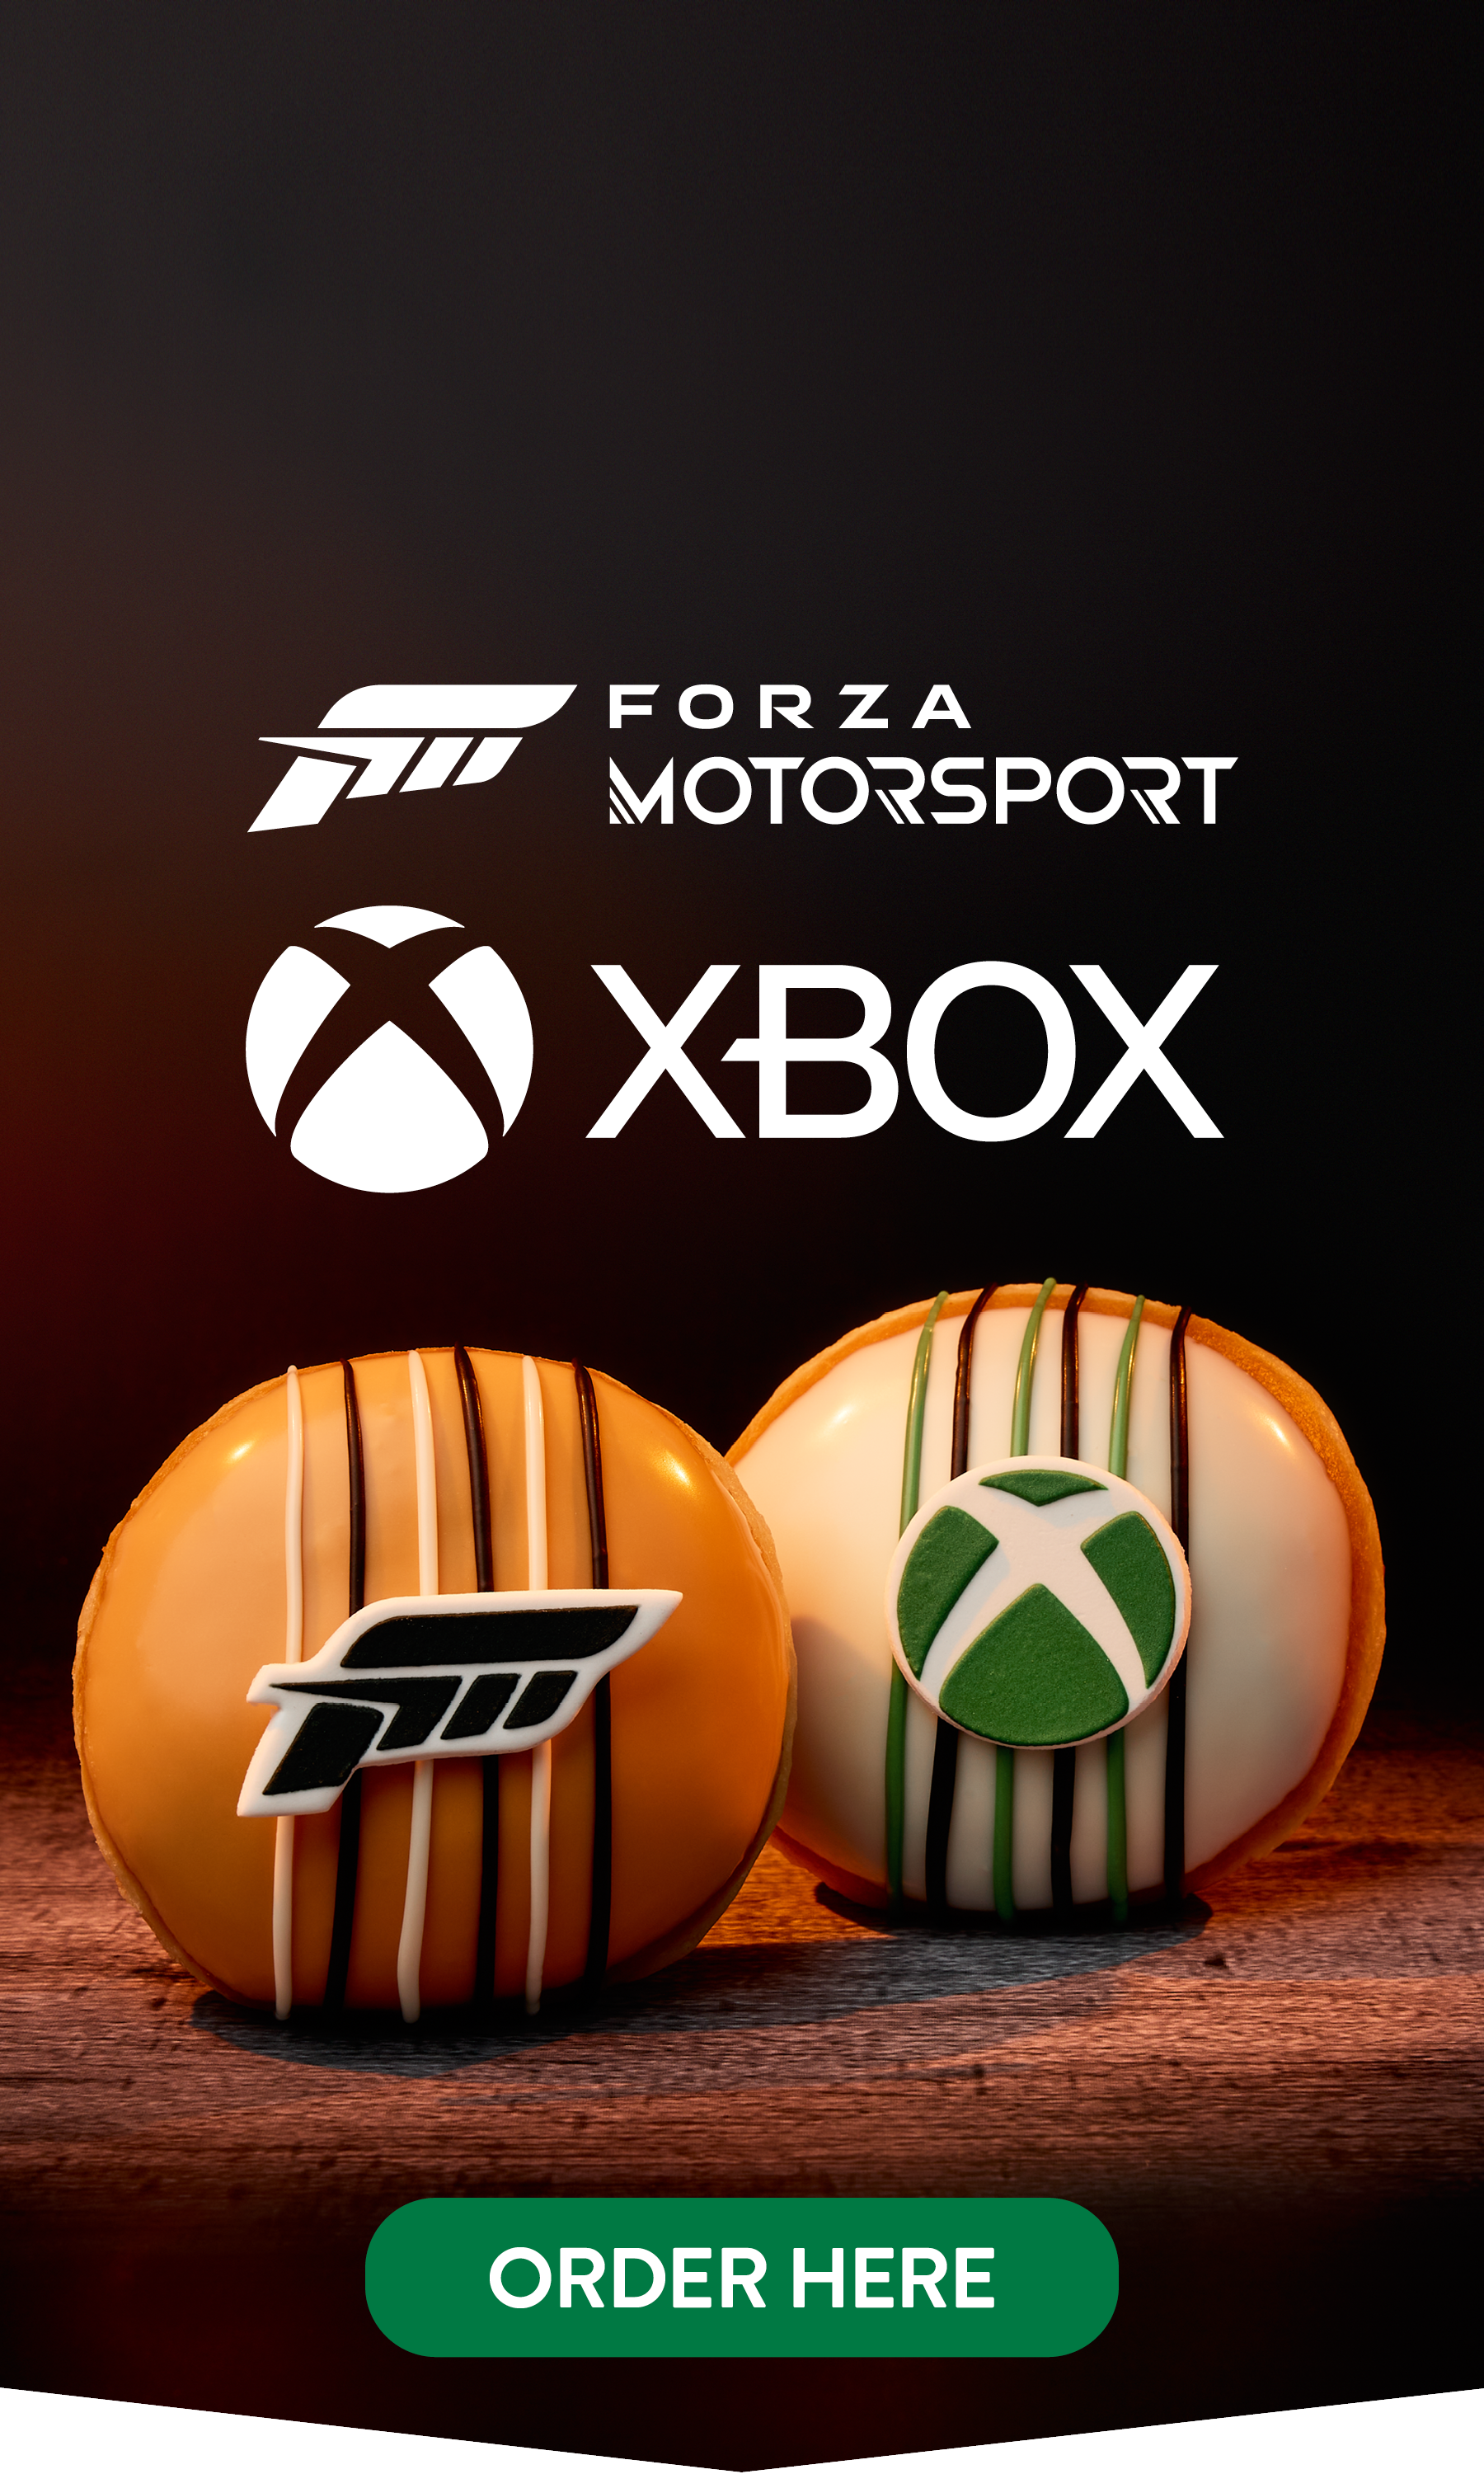 Krispy Kreme XBOX Forza Motorsport LTO - KK Mobile Banner 1980x890px FINAL